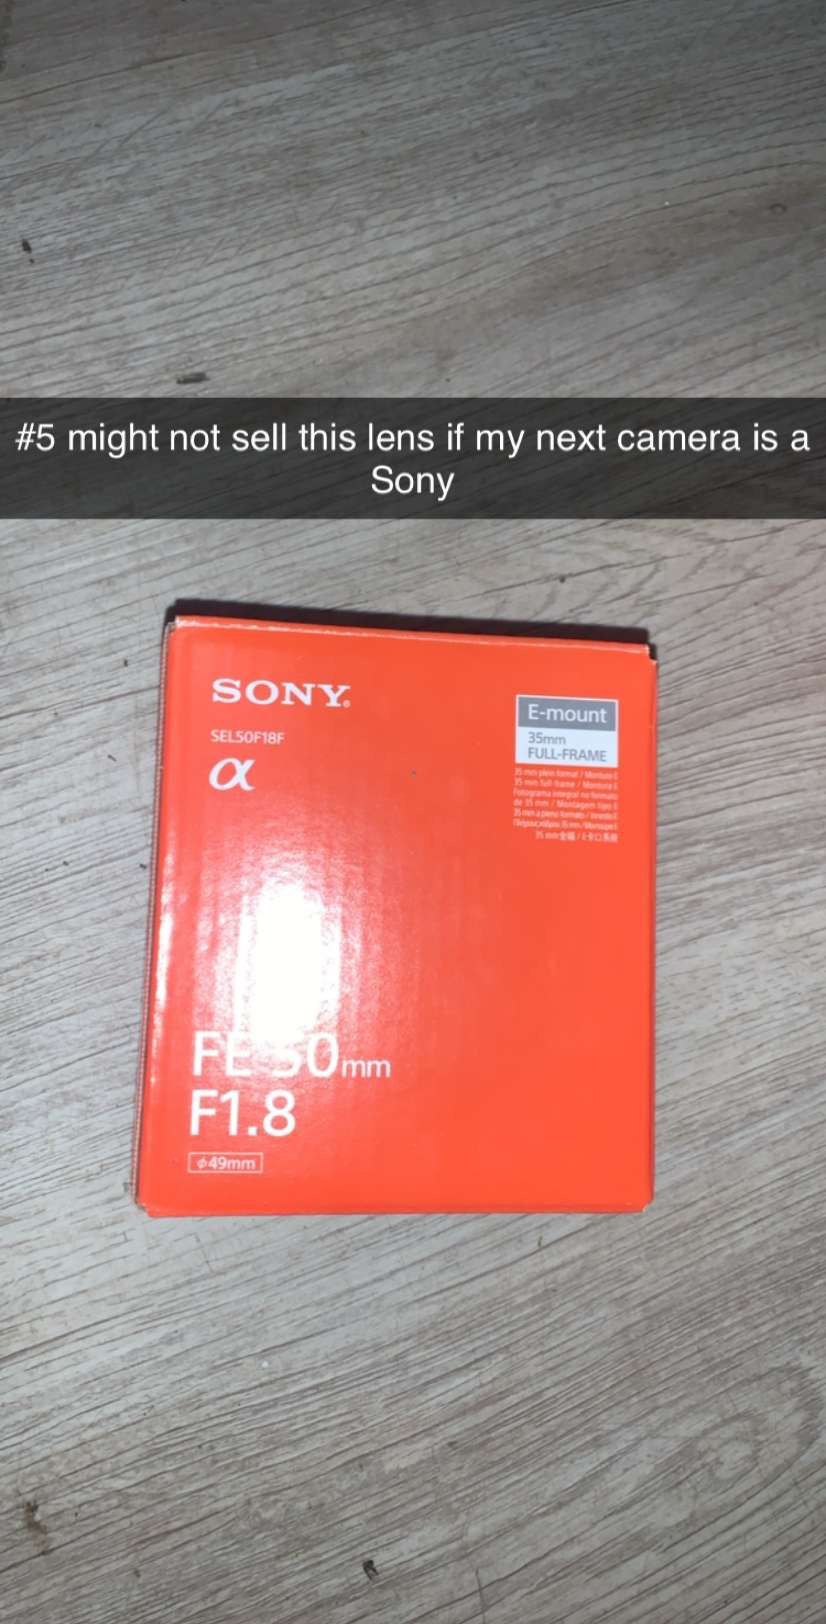 50mm Sony f1.8 lens